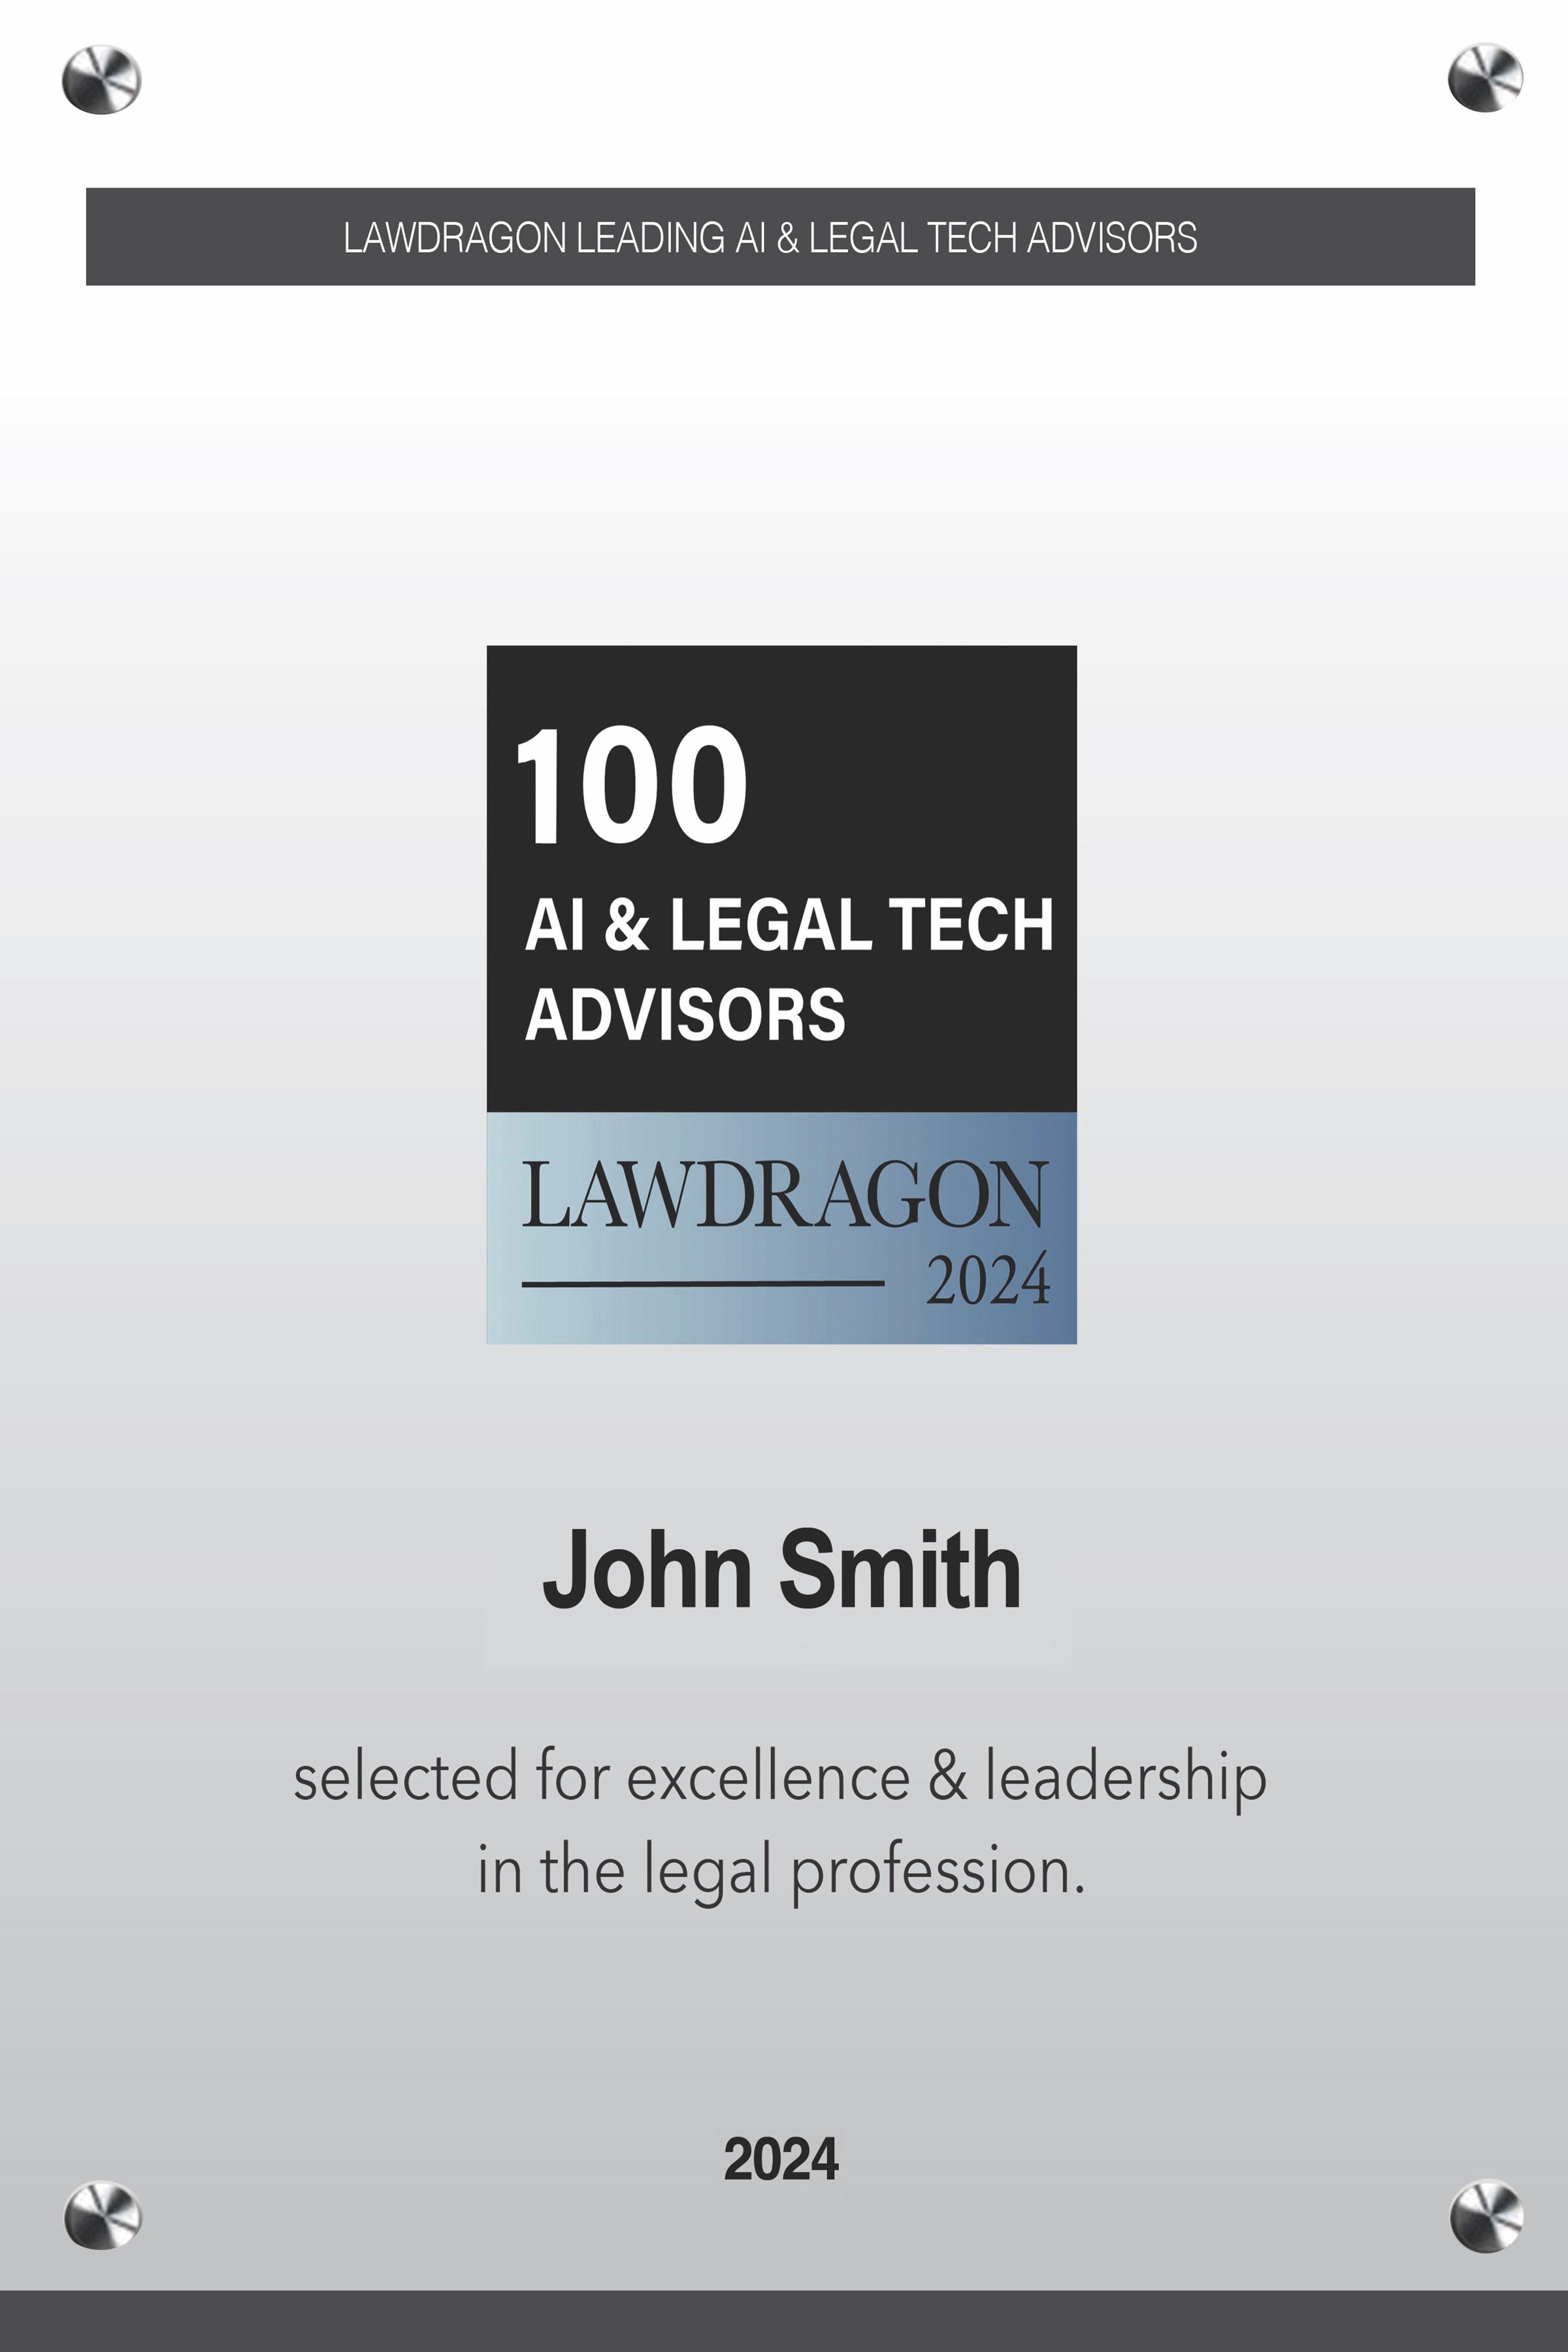 2024 AI & Legal Tech Advisors Acrylic Plaque